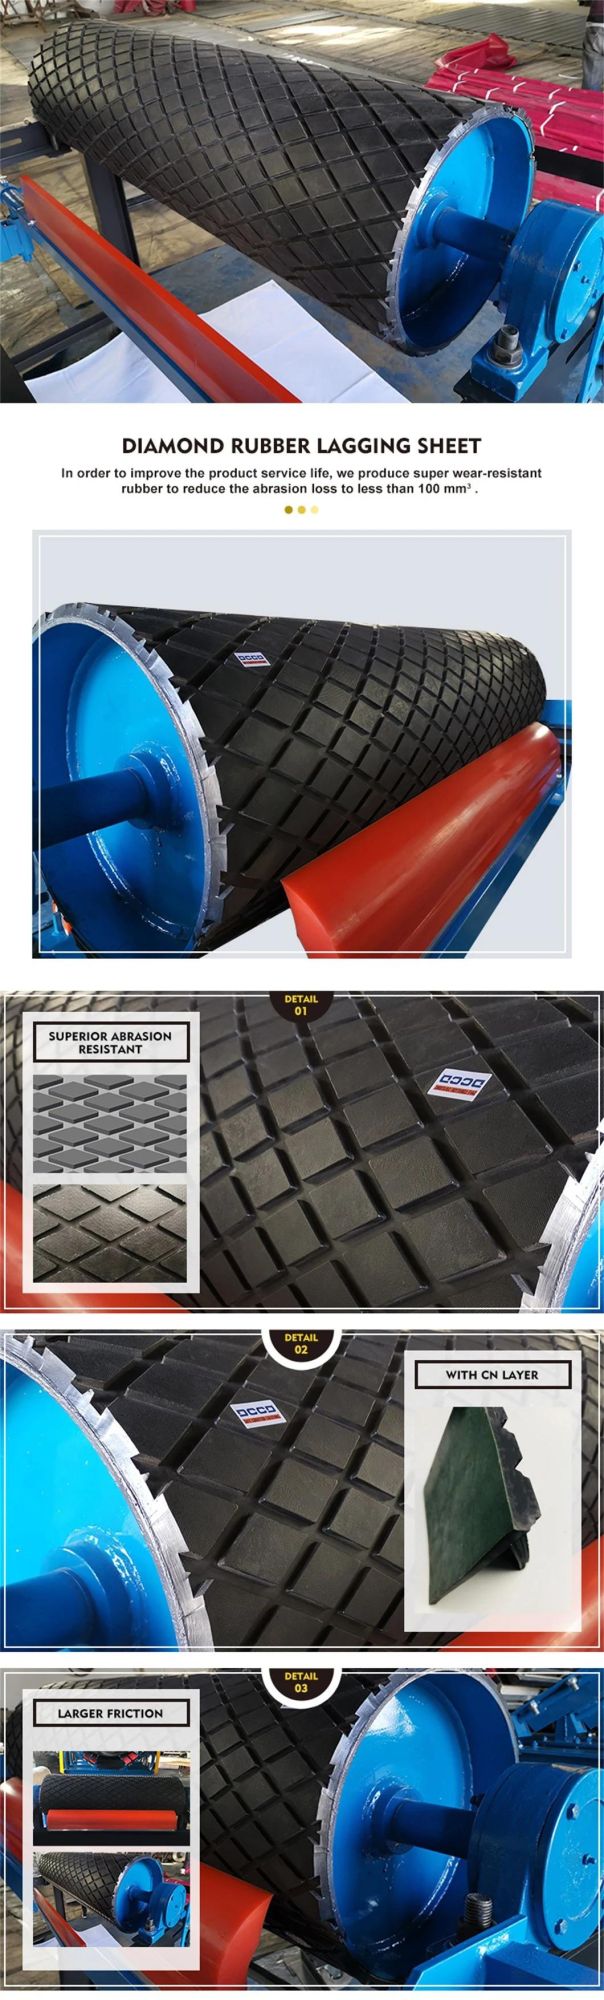 Conveyor Drum Lagging Rubber Sheet Hot Vulcanized Rubber Sheet 15 mm Thickness Energy & Mining Machinery Repair Shops